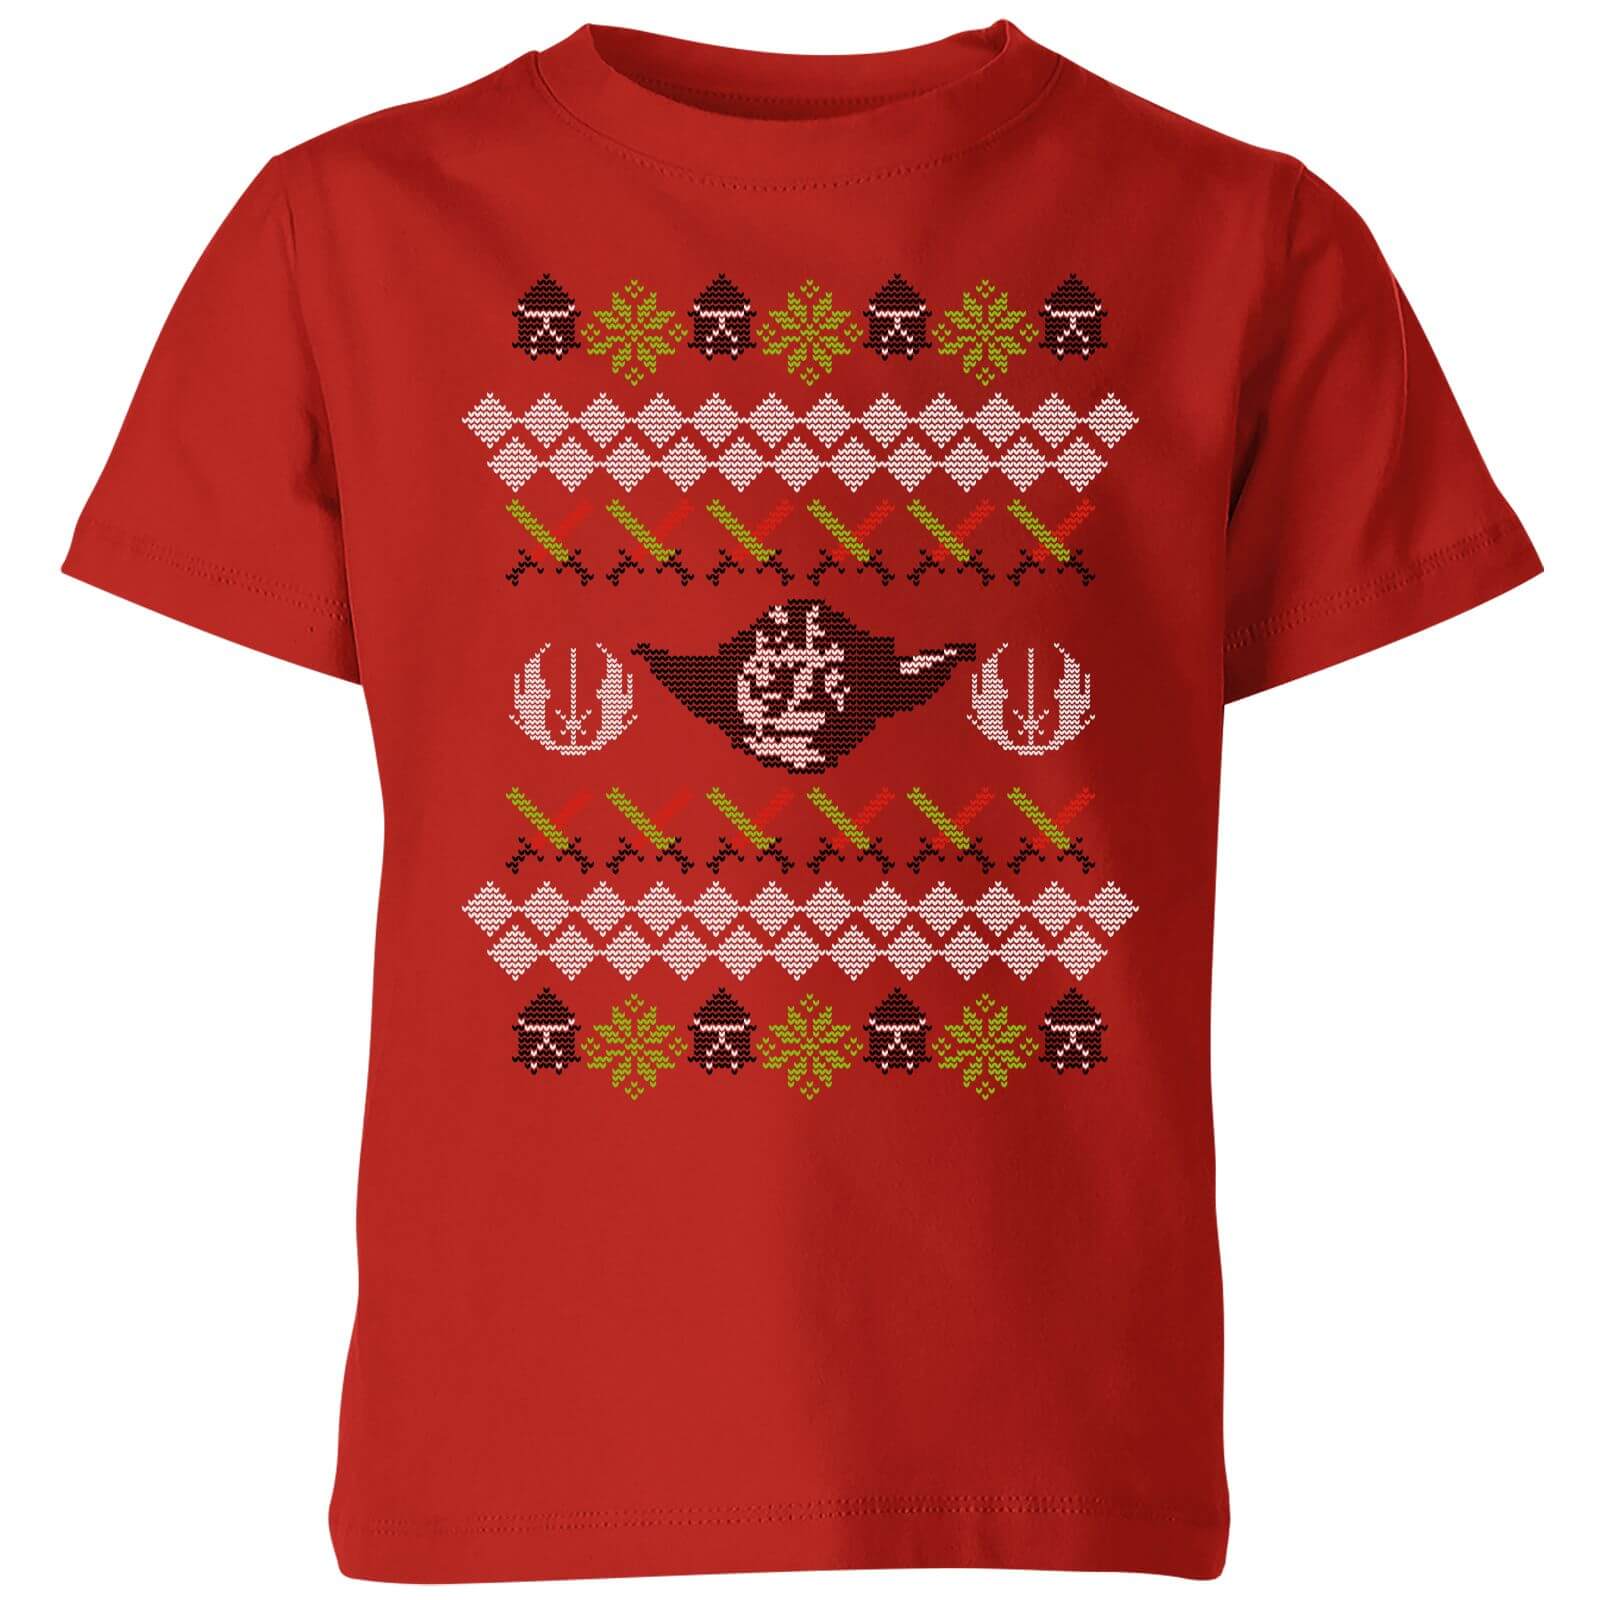 Star Wars Yoda Knit Kids' Christmas T-Shirt - Red - 7-8 Years - Red